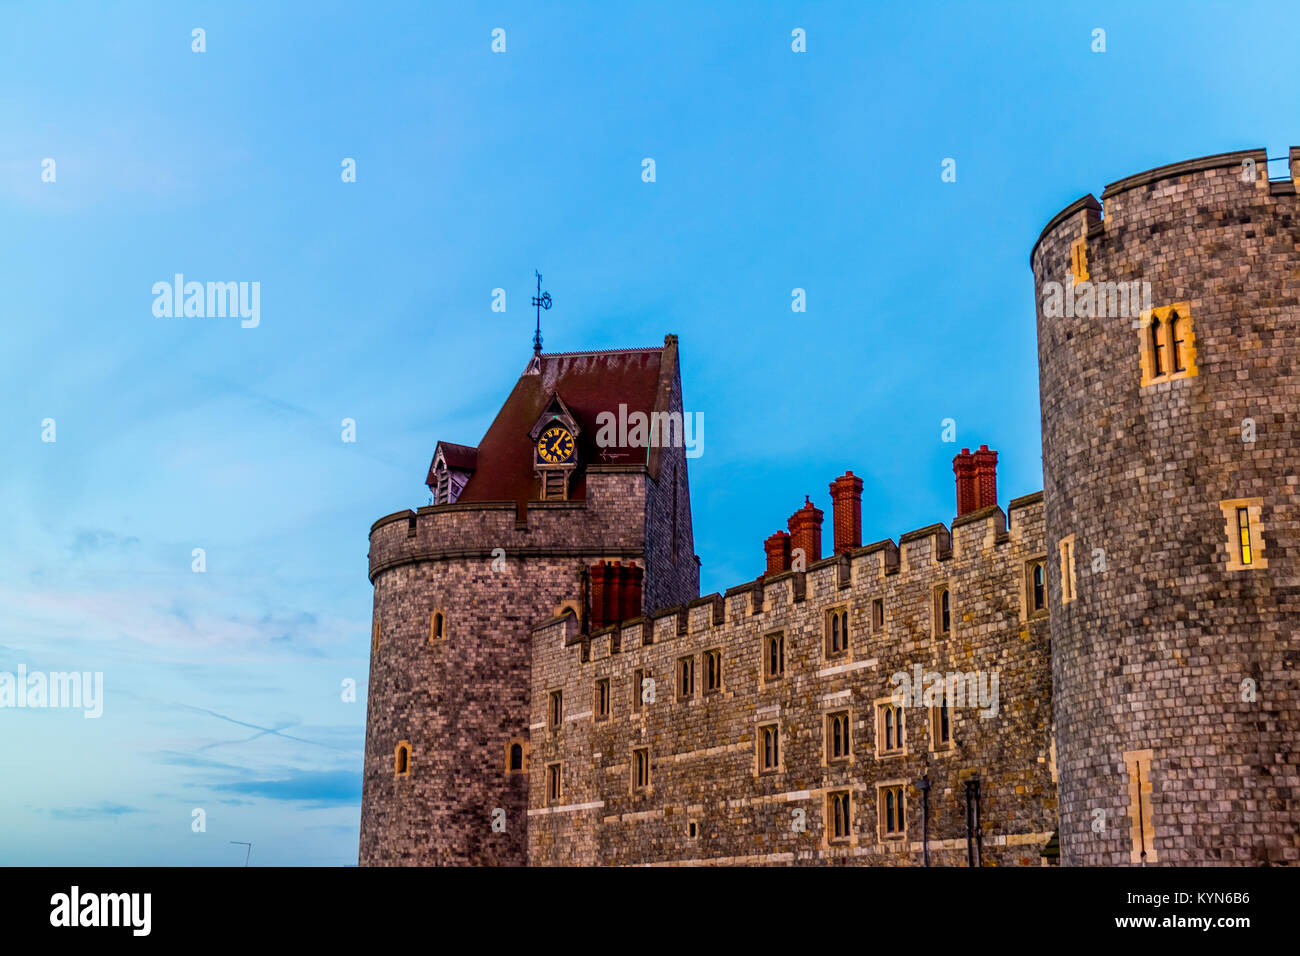 Windsor Castle Stock Photo